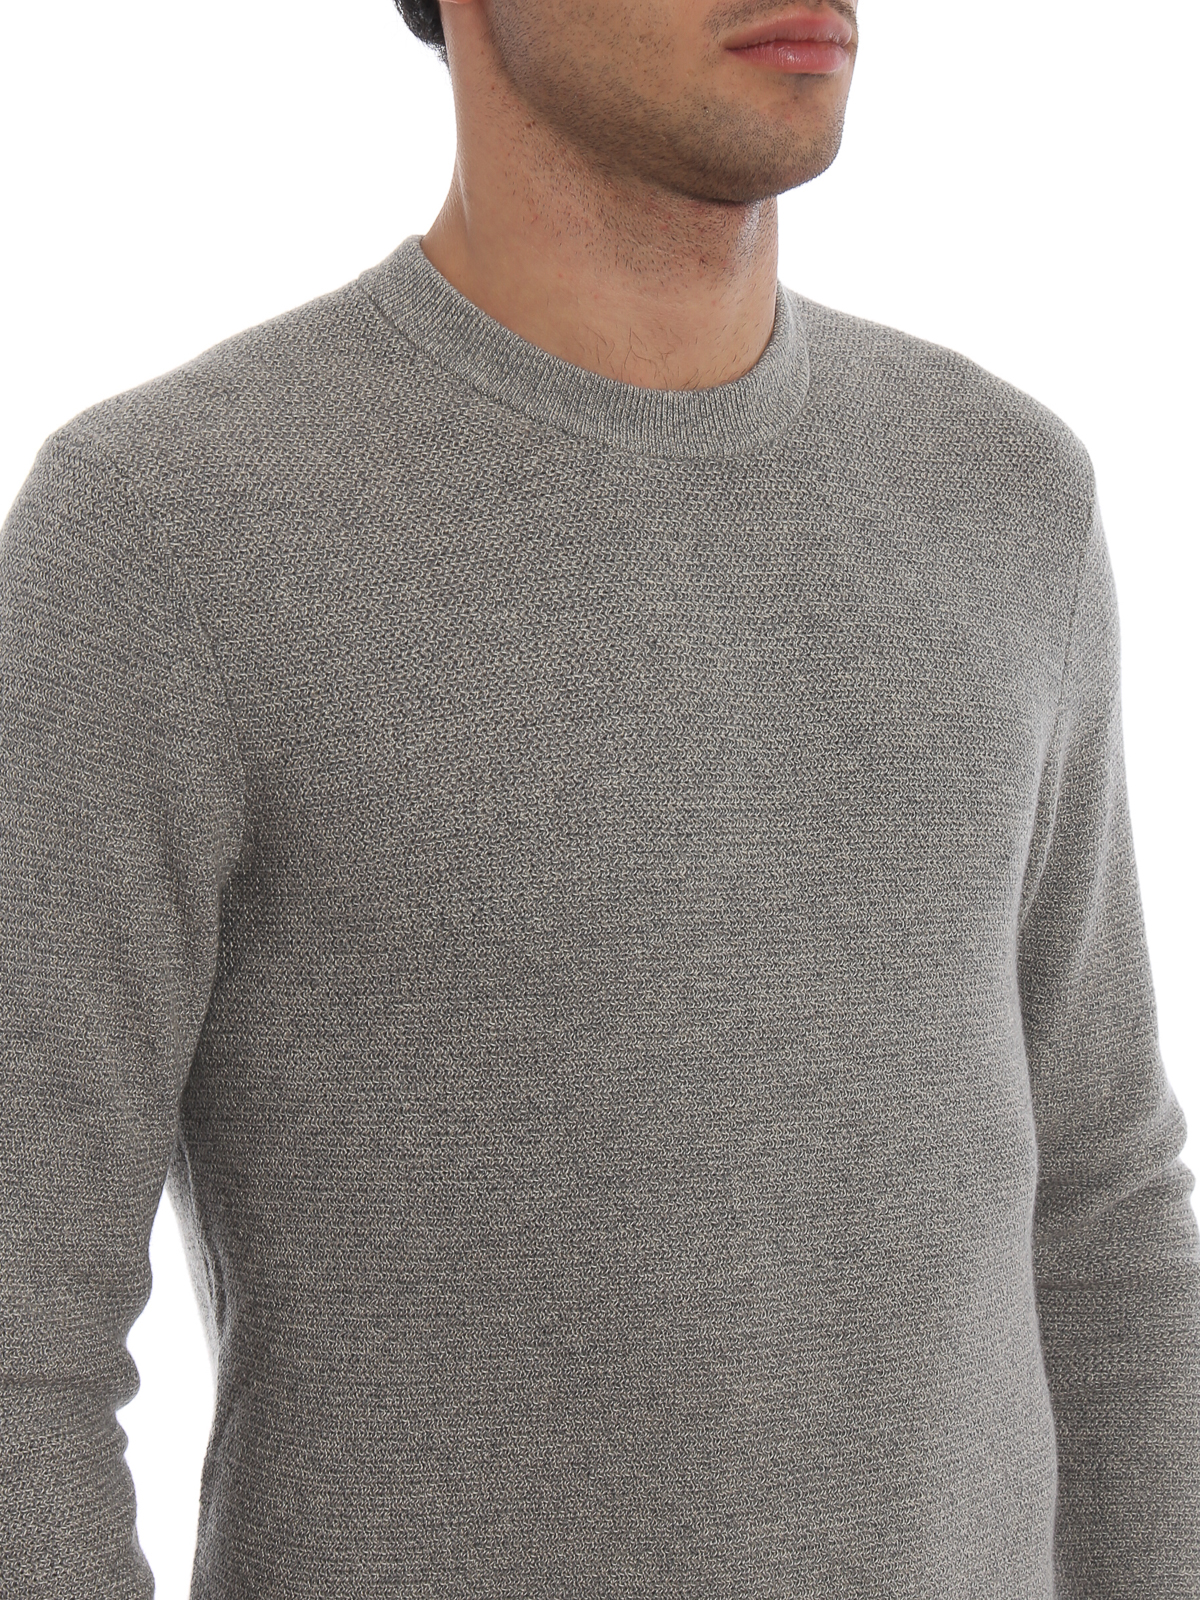 Crew necks Michael Kors - Light grey soft cotton and wool sweater -  CF86KHGD5DD220